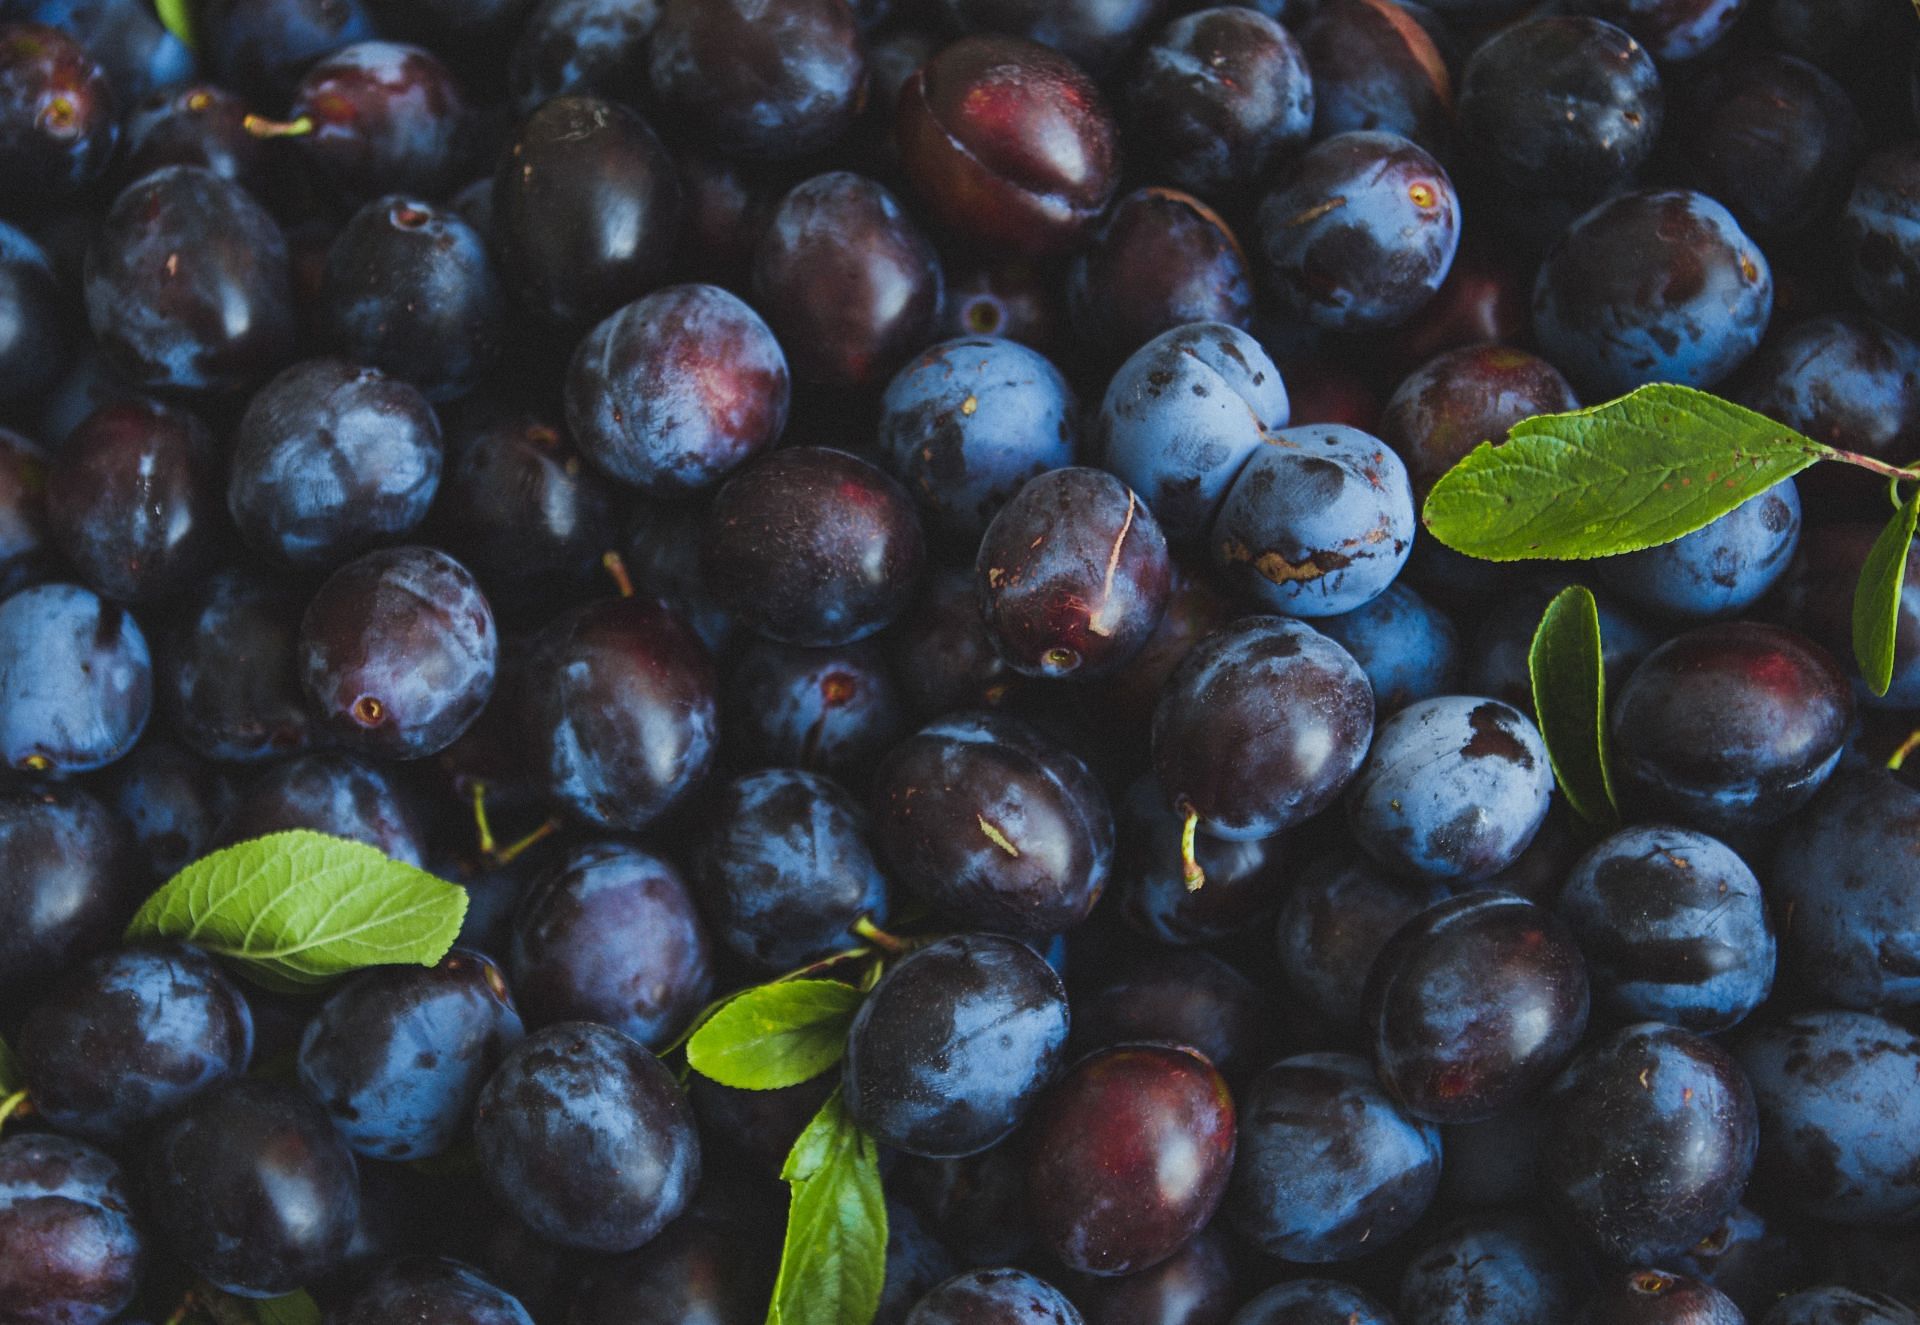 Berries are one of the best superfoods. (Image via Unsplash/Jasper Benning)